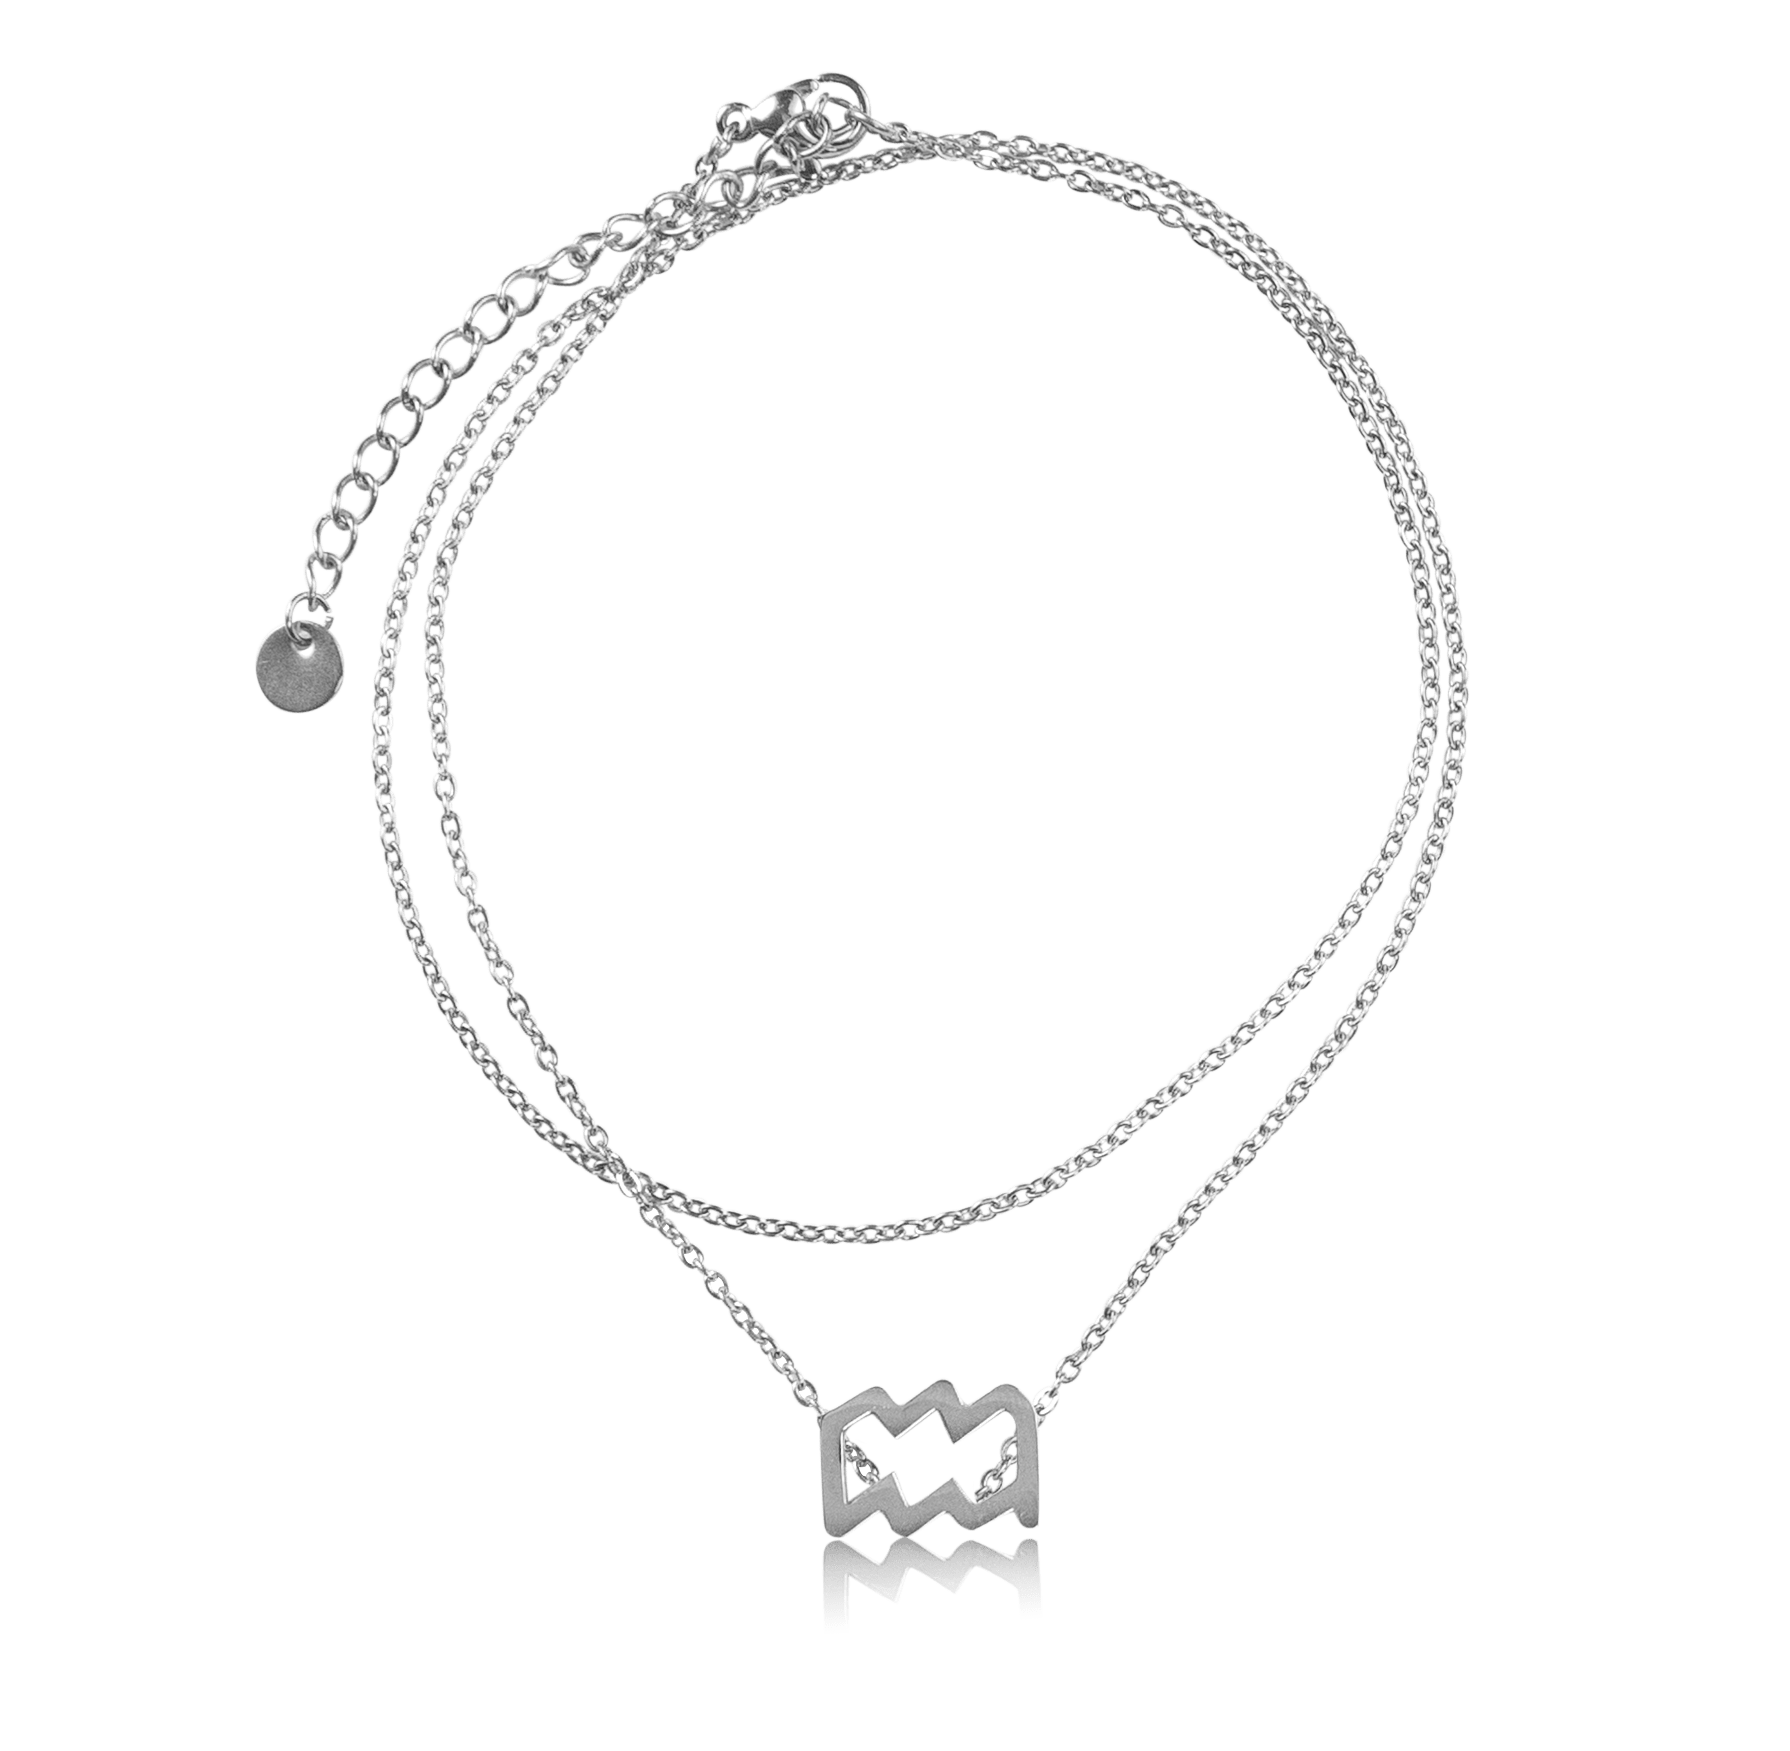 bianco rosso Bracelet Aquarius - Bracelet cyprus greece jewelry gift free shipping europe worldwide